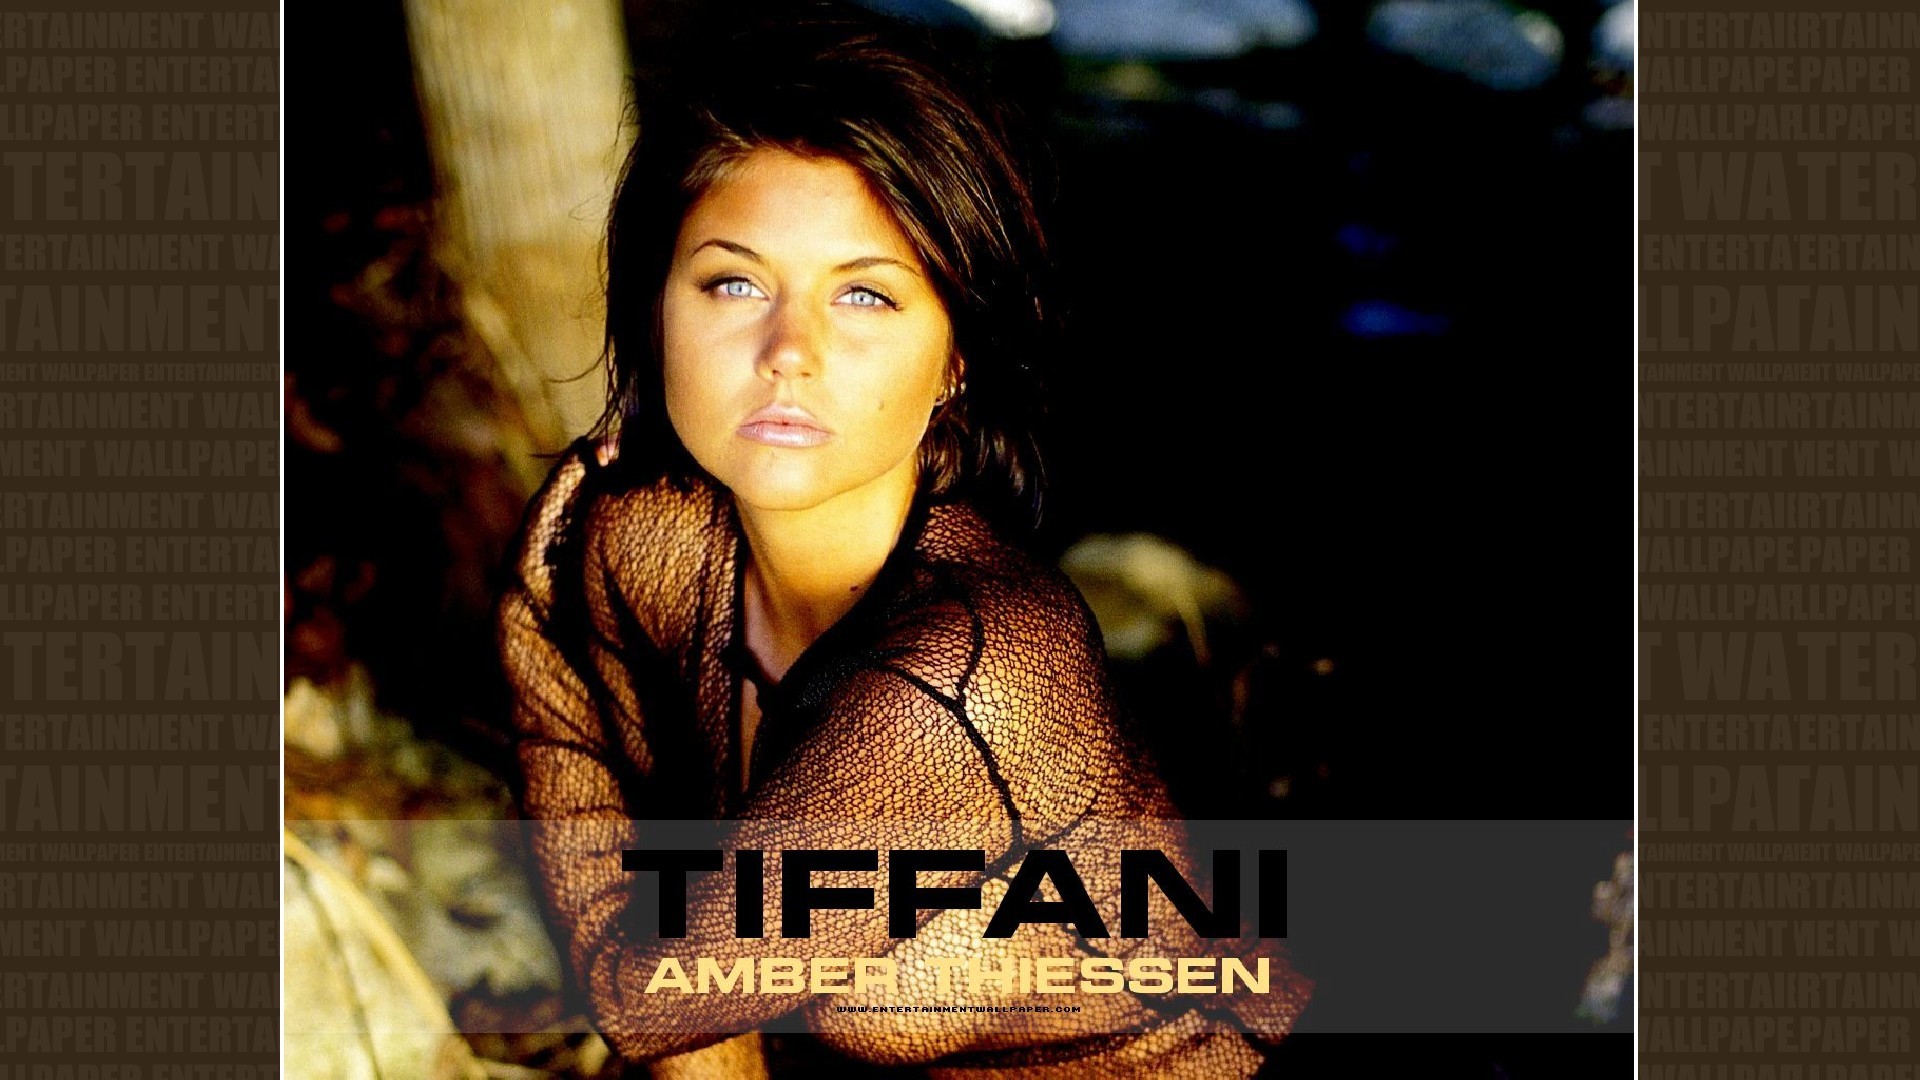 1920x1080 Tiffani-Amber Thiessen Wallpaper - Original size, download now.